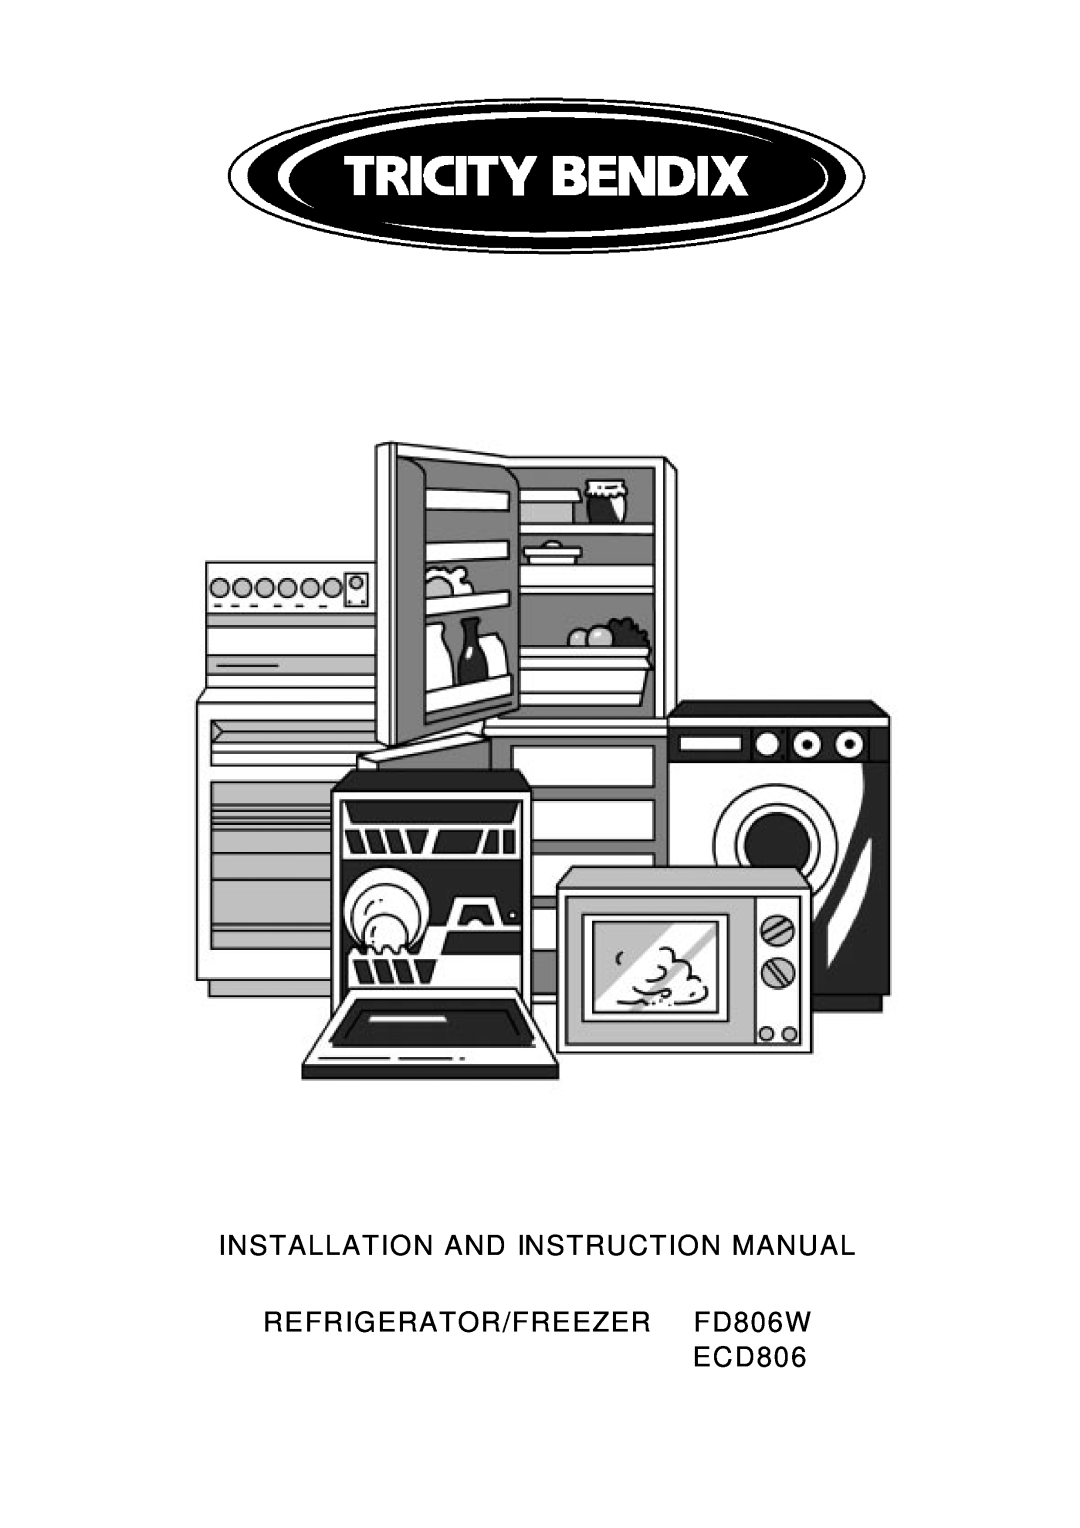 Tricity Bendix instruction manual Installation And Instruction Manual, REFRIGERATOR/FREEZER FD806W ECD806 